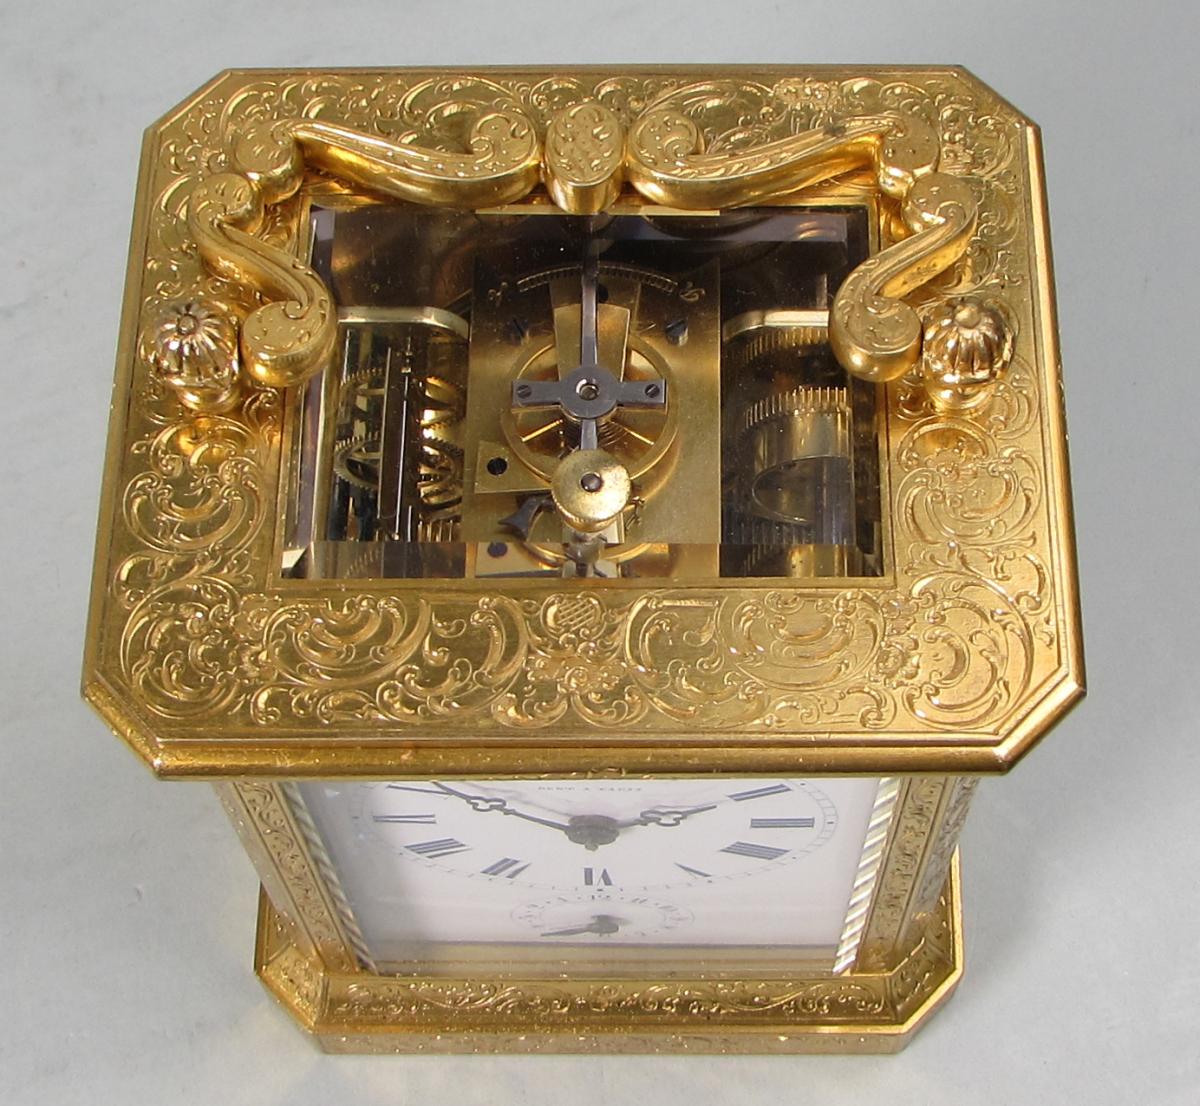 Paul Garnier Paris carriage clock top